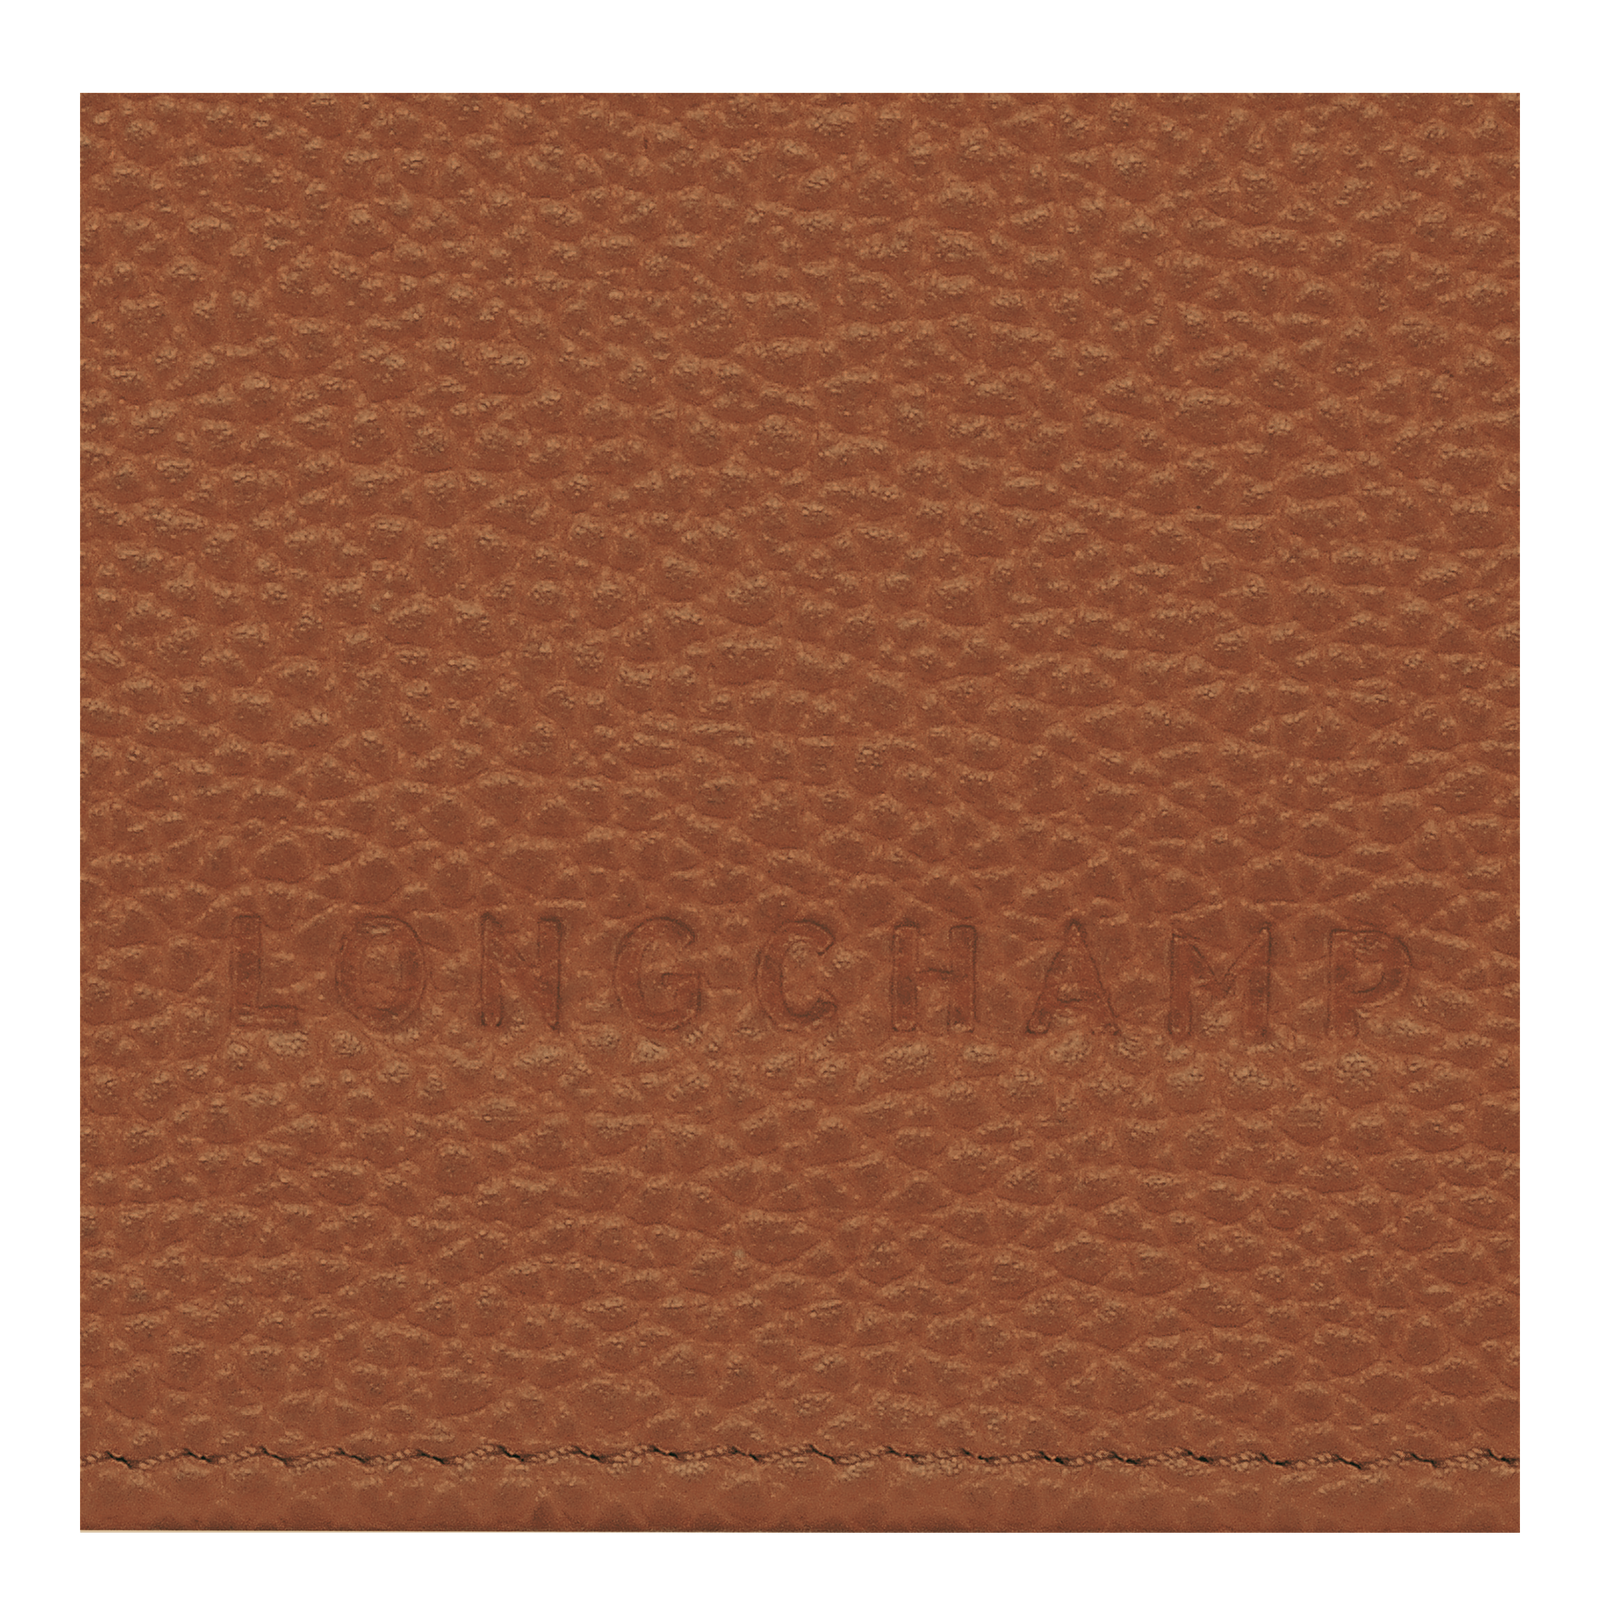 Le Foulonné Continental wallet, Caramel